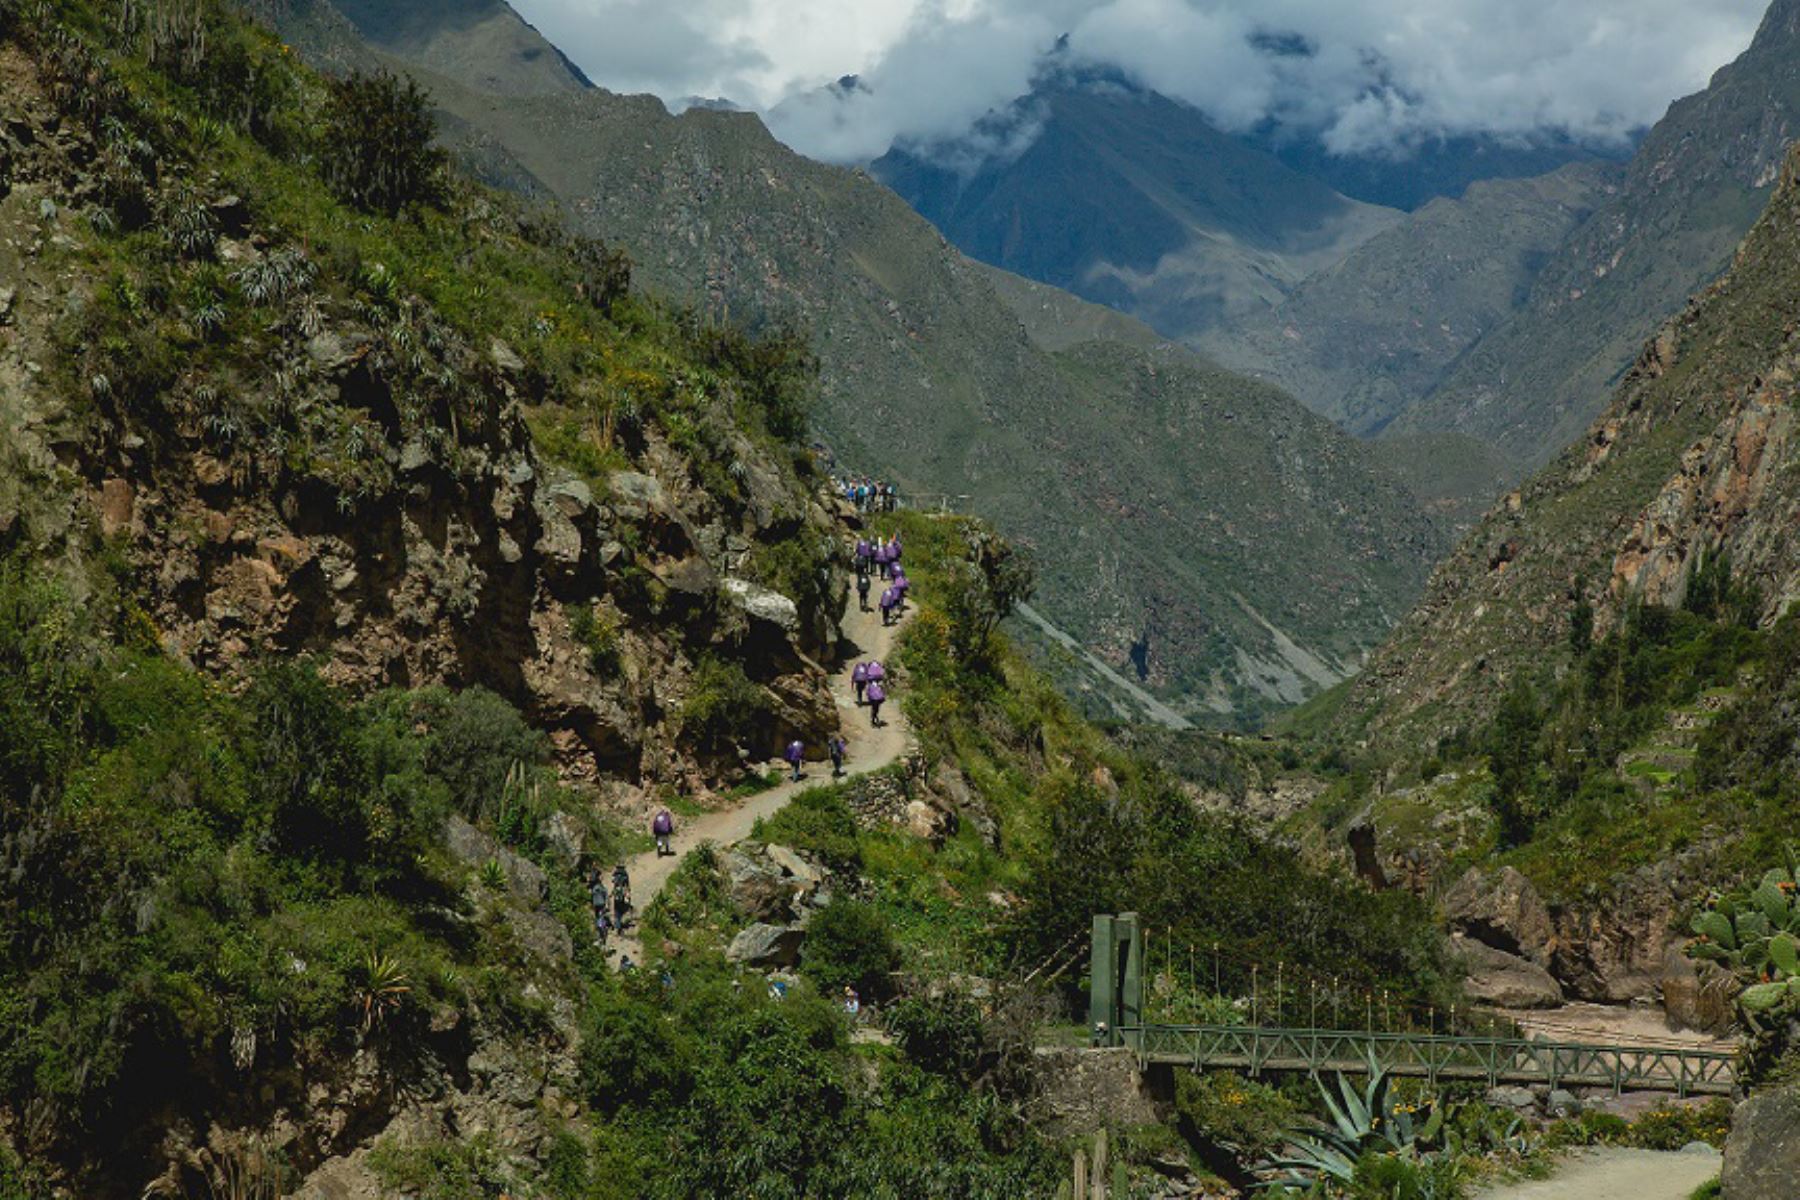 Red de Camino Inca postula a certificación internacional como destino turístico sostenible